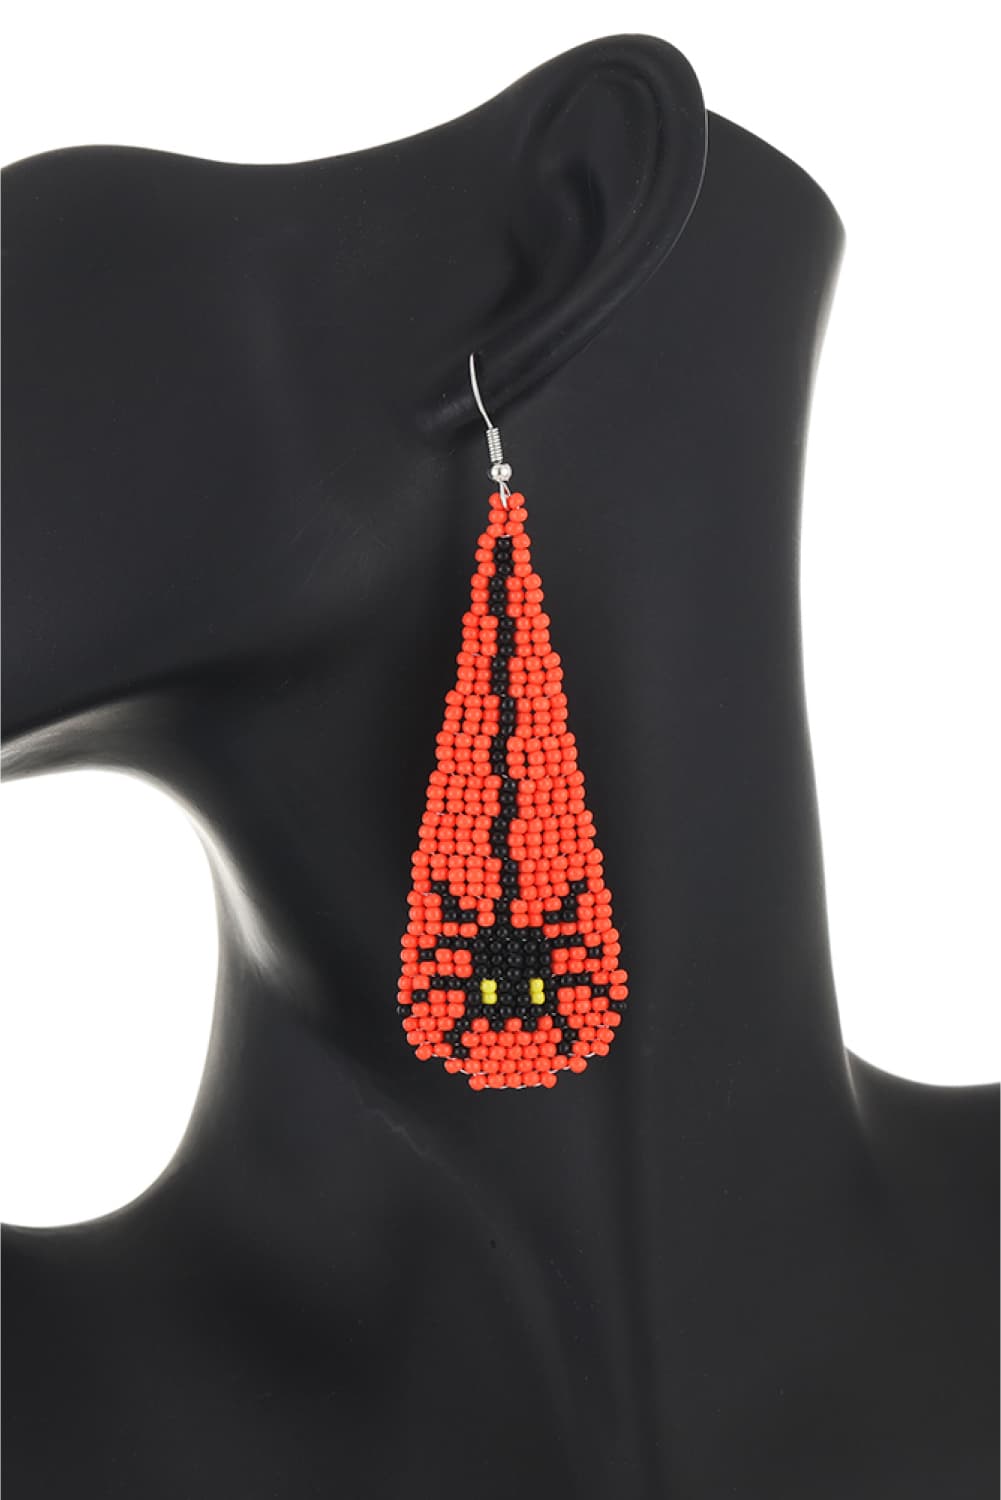 Halloween Bead Fringe Earrings - Global Village Kailua Boutique